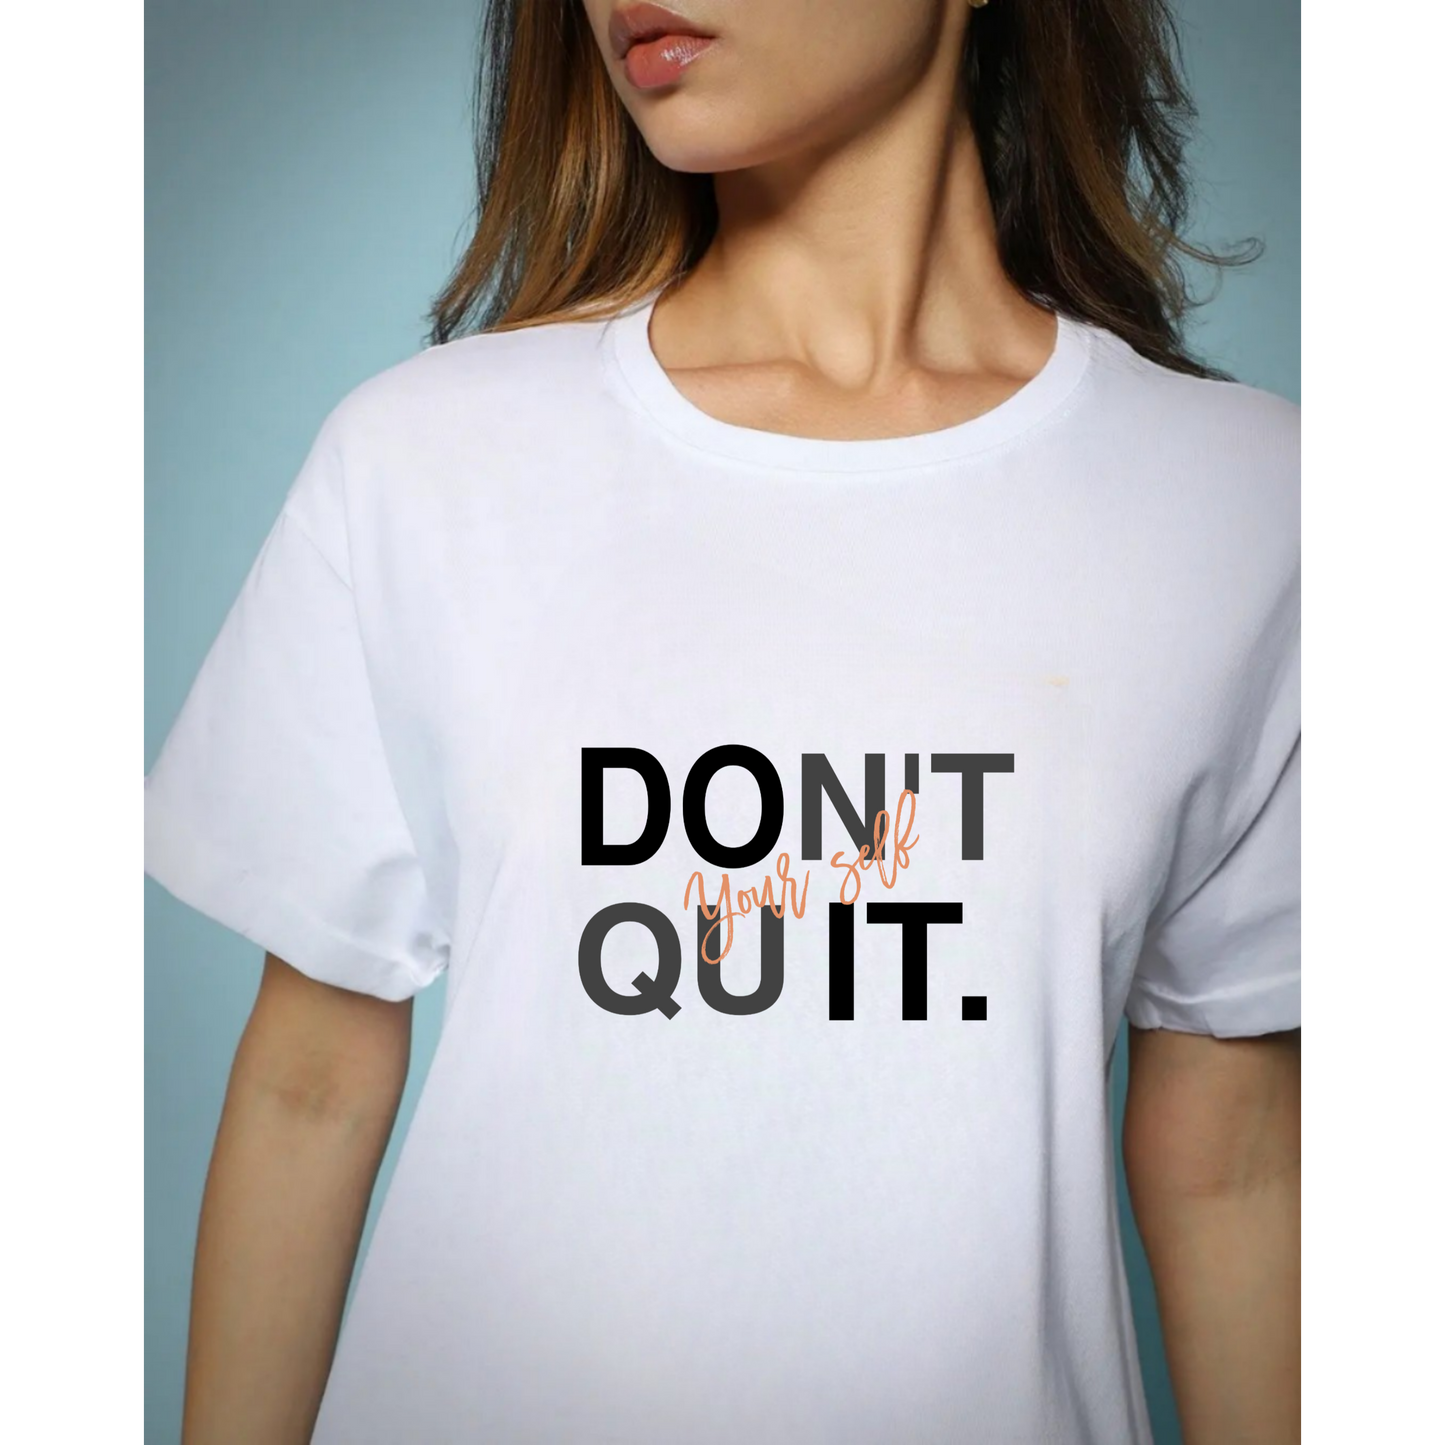 Don't Quit Self (Printed )White Women's T-Shirt